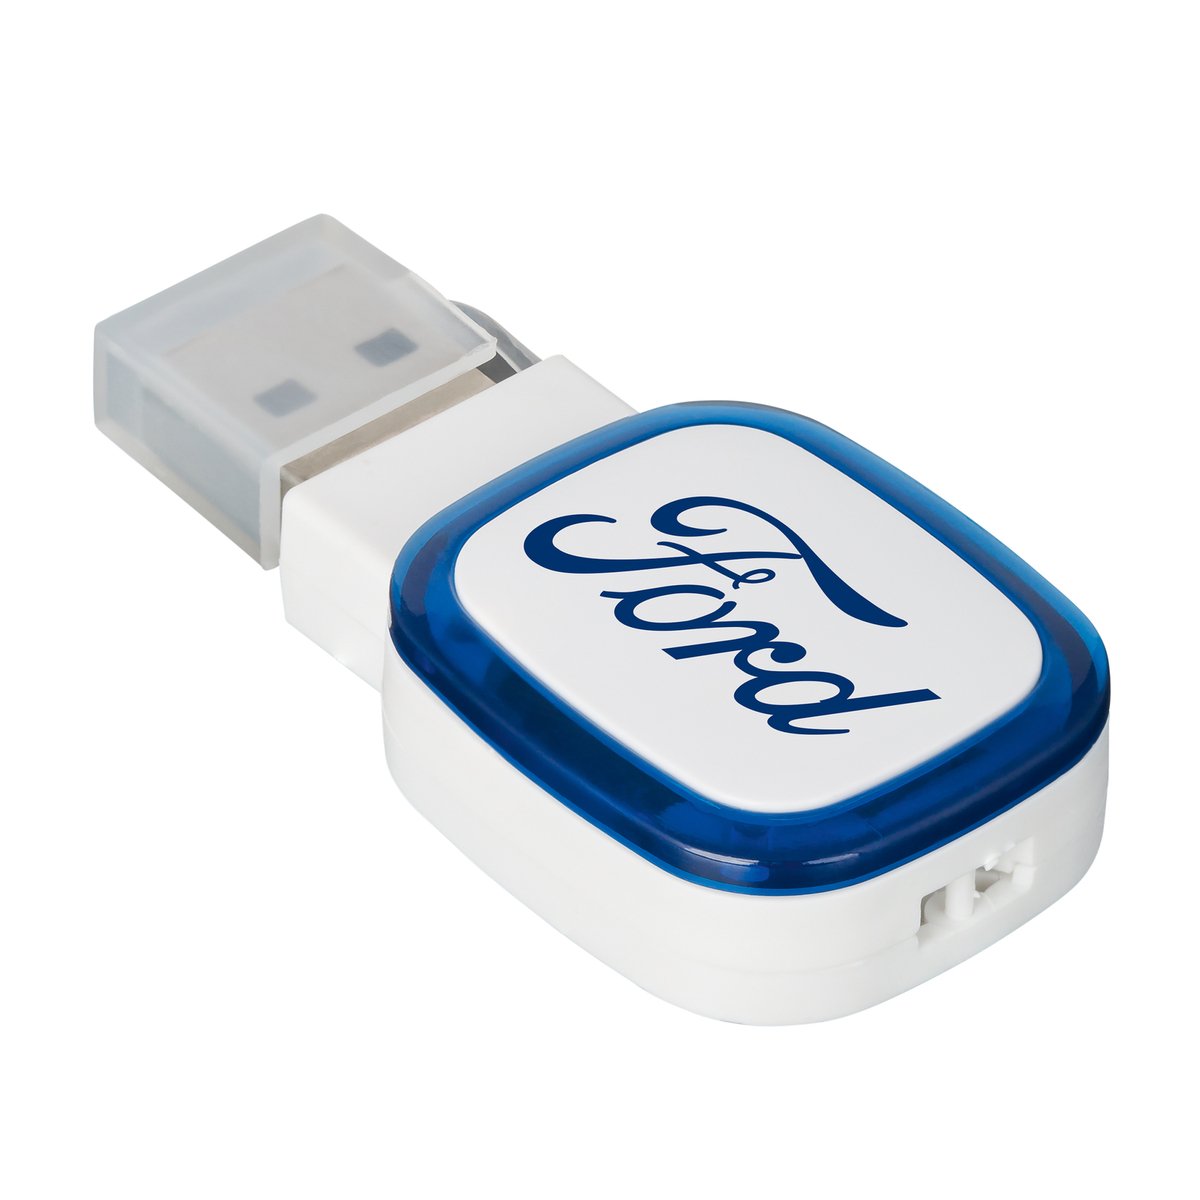 10 x 4GB USB Stick mit Ihrem LogoDruckWerbung REFLECTS ARAUCA 